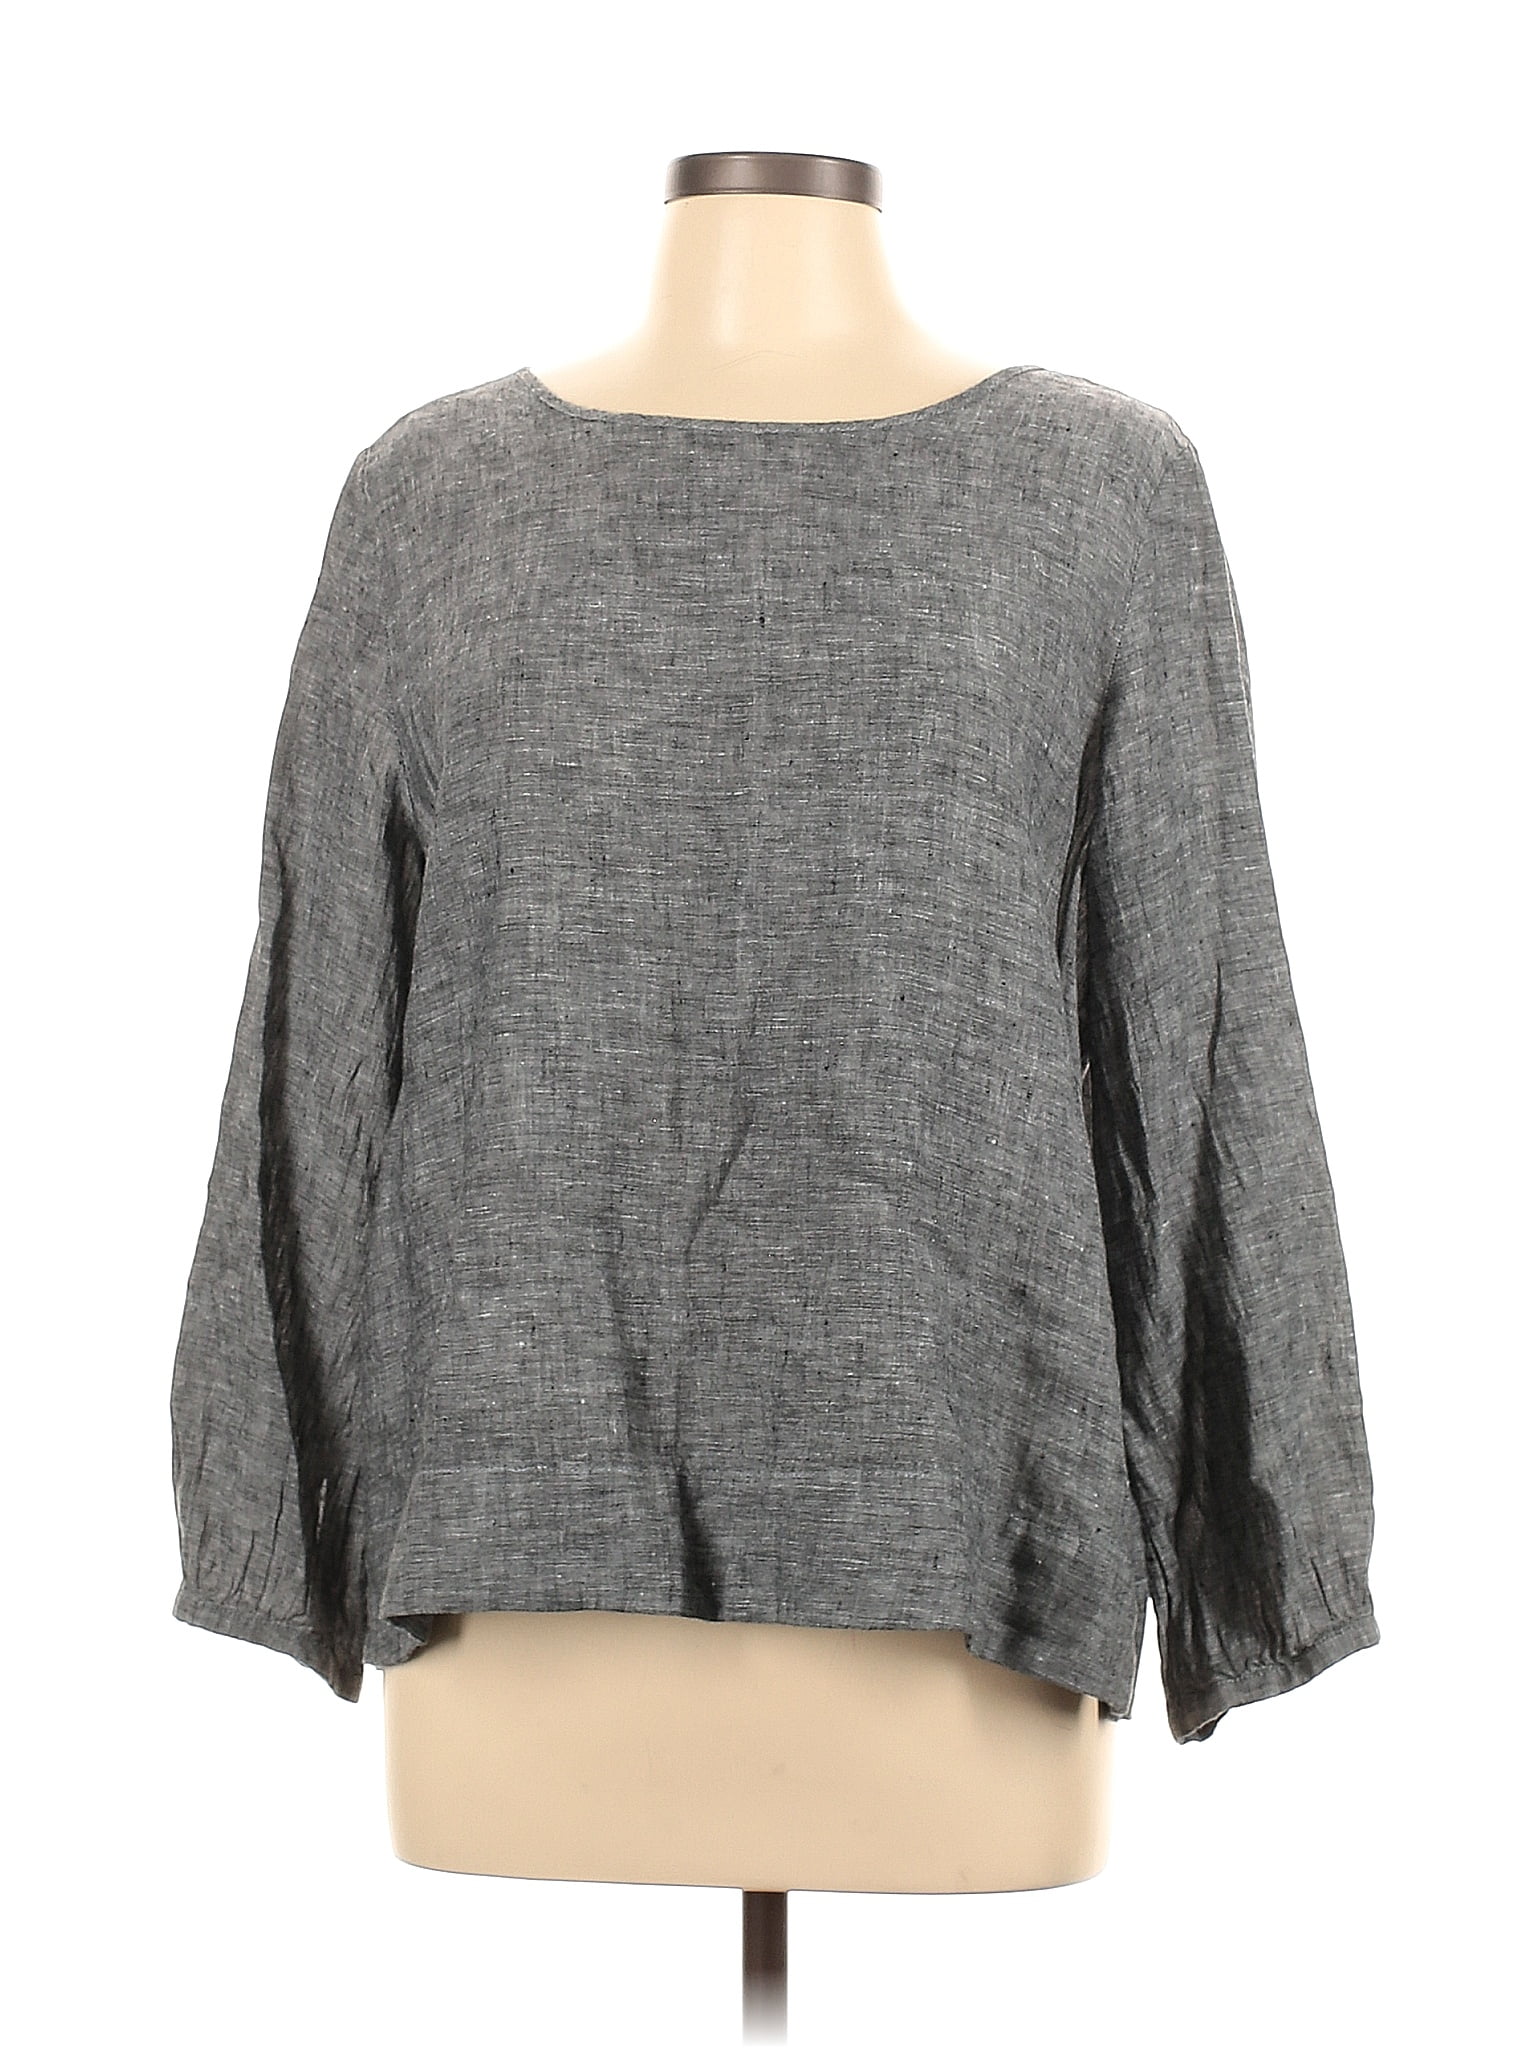 Tahari 100% Linen Gray Long Sleeve Blouse Size L - 74% off | ThredUp